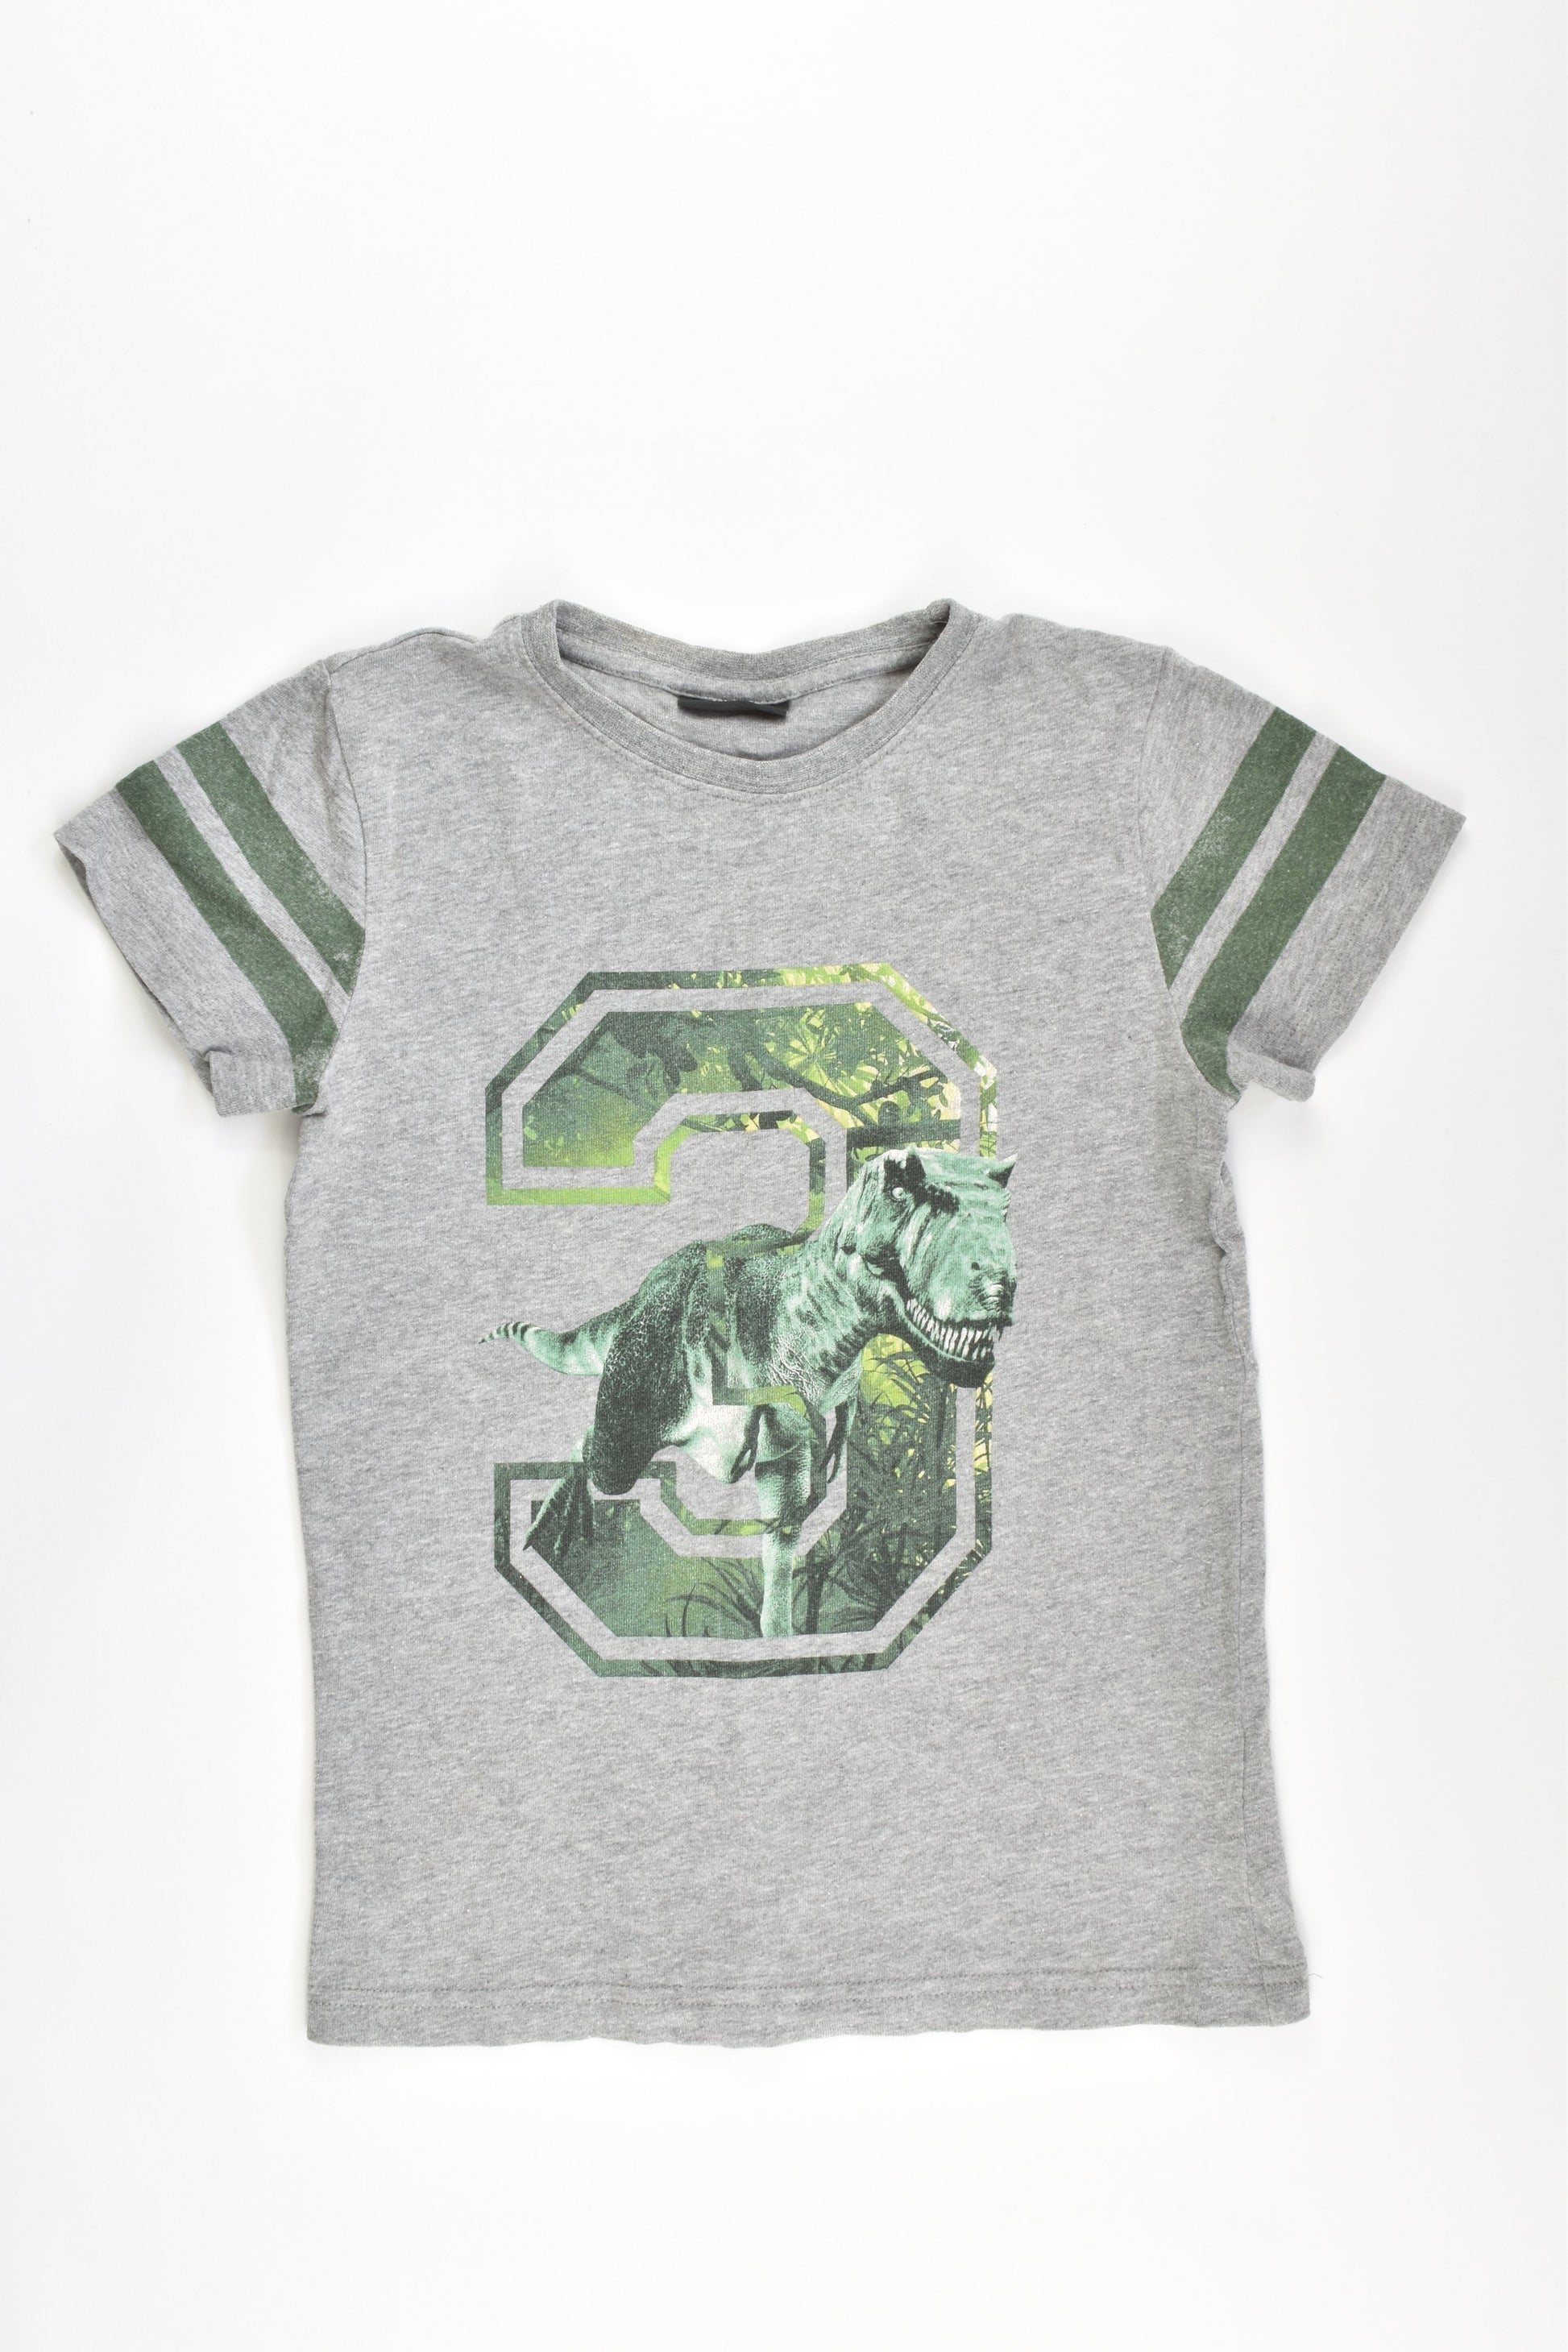 Next Size 5 (Small sizing) T-Rex T-shirt